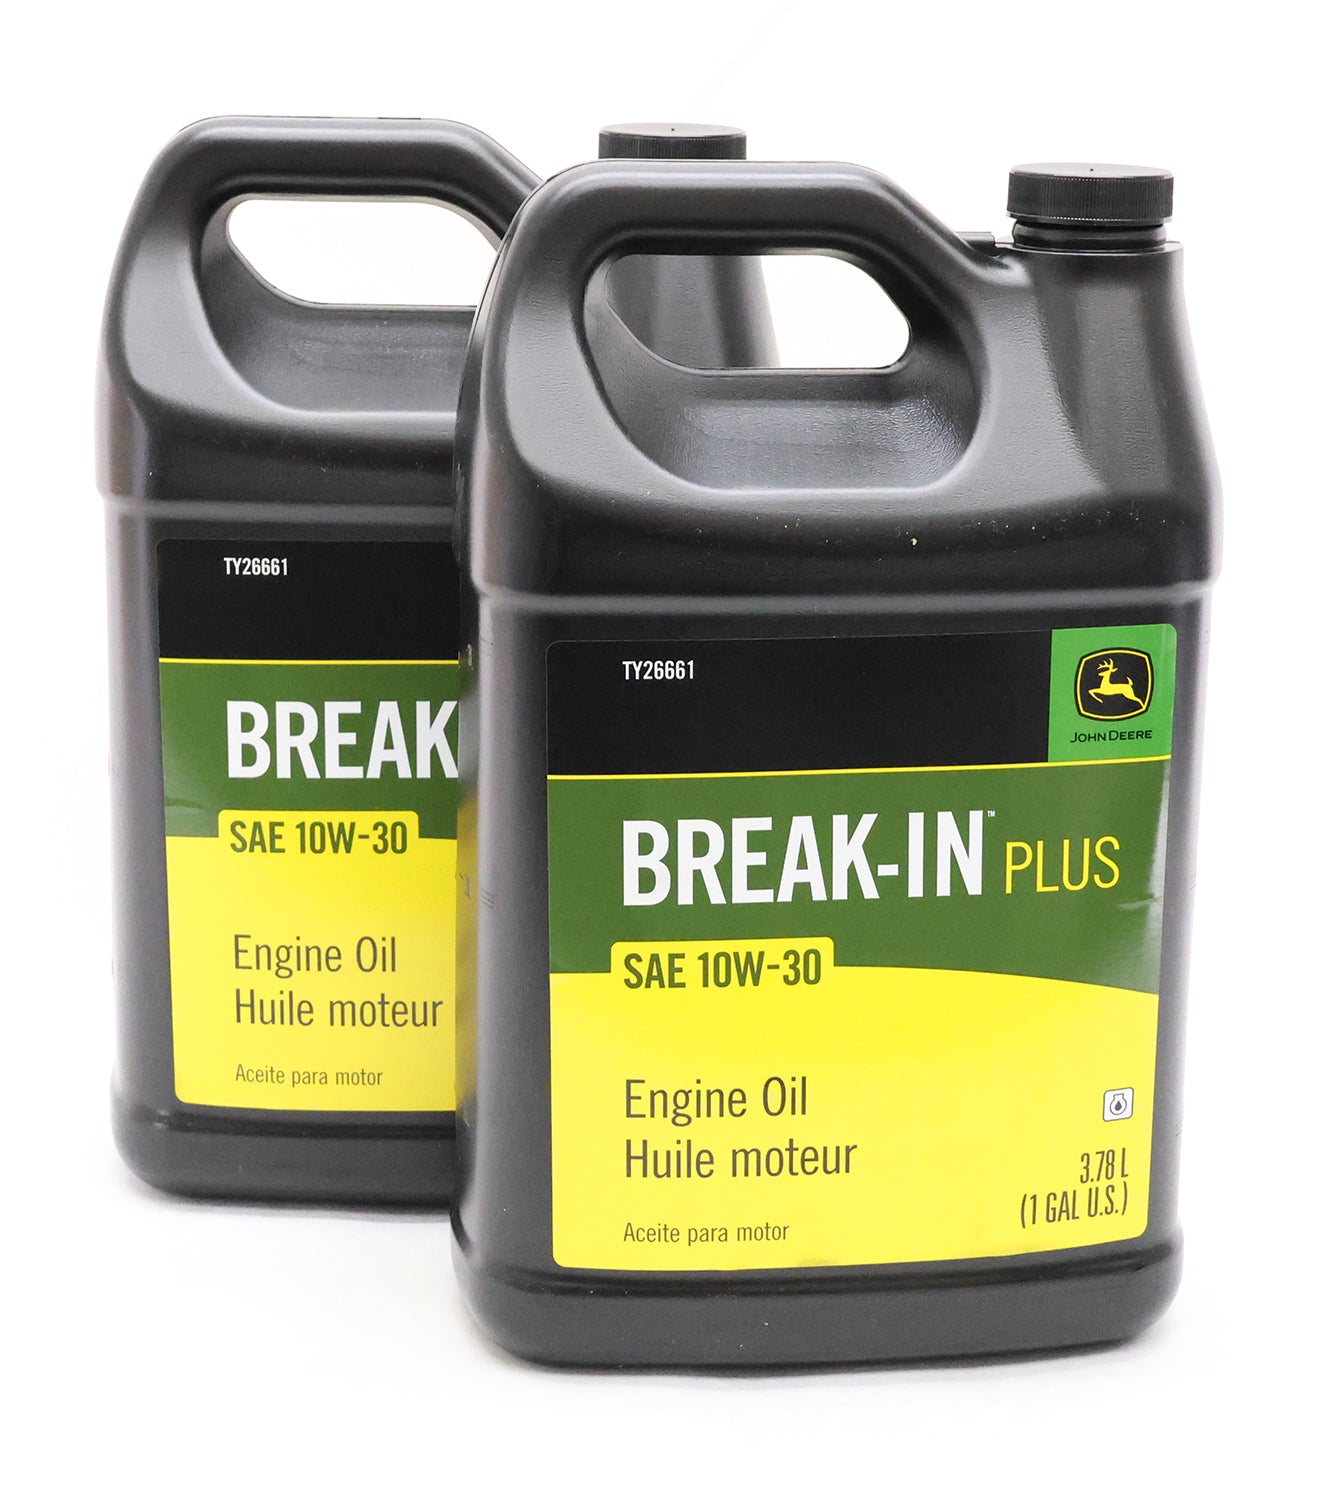 John Deere Original Equipment (2 Gallons) Break-In Plus Engine Oil - TY26661